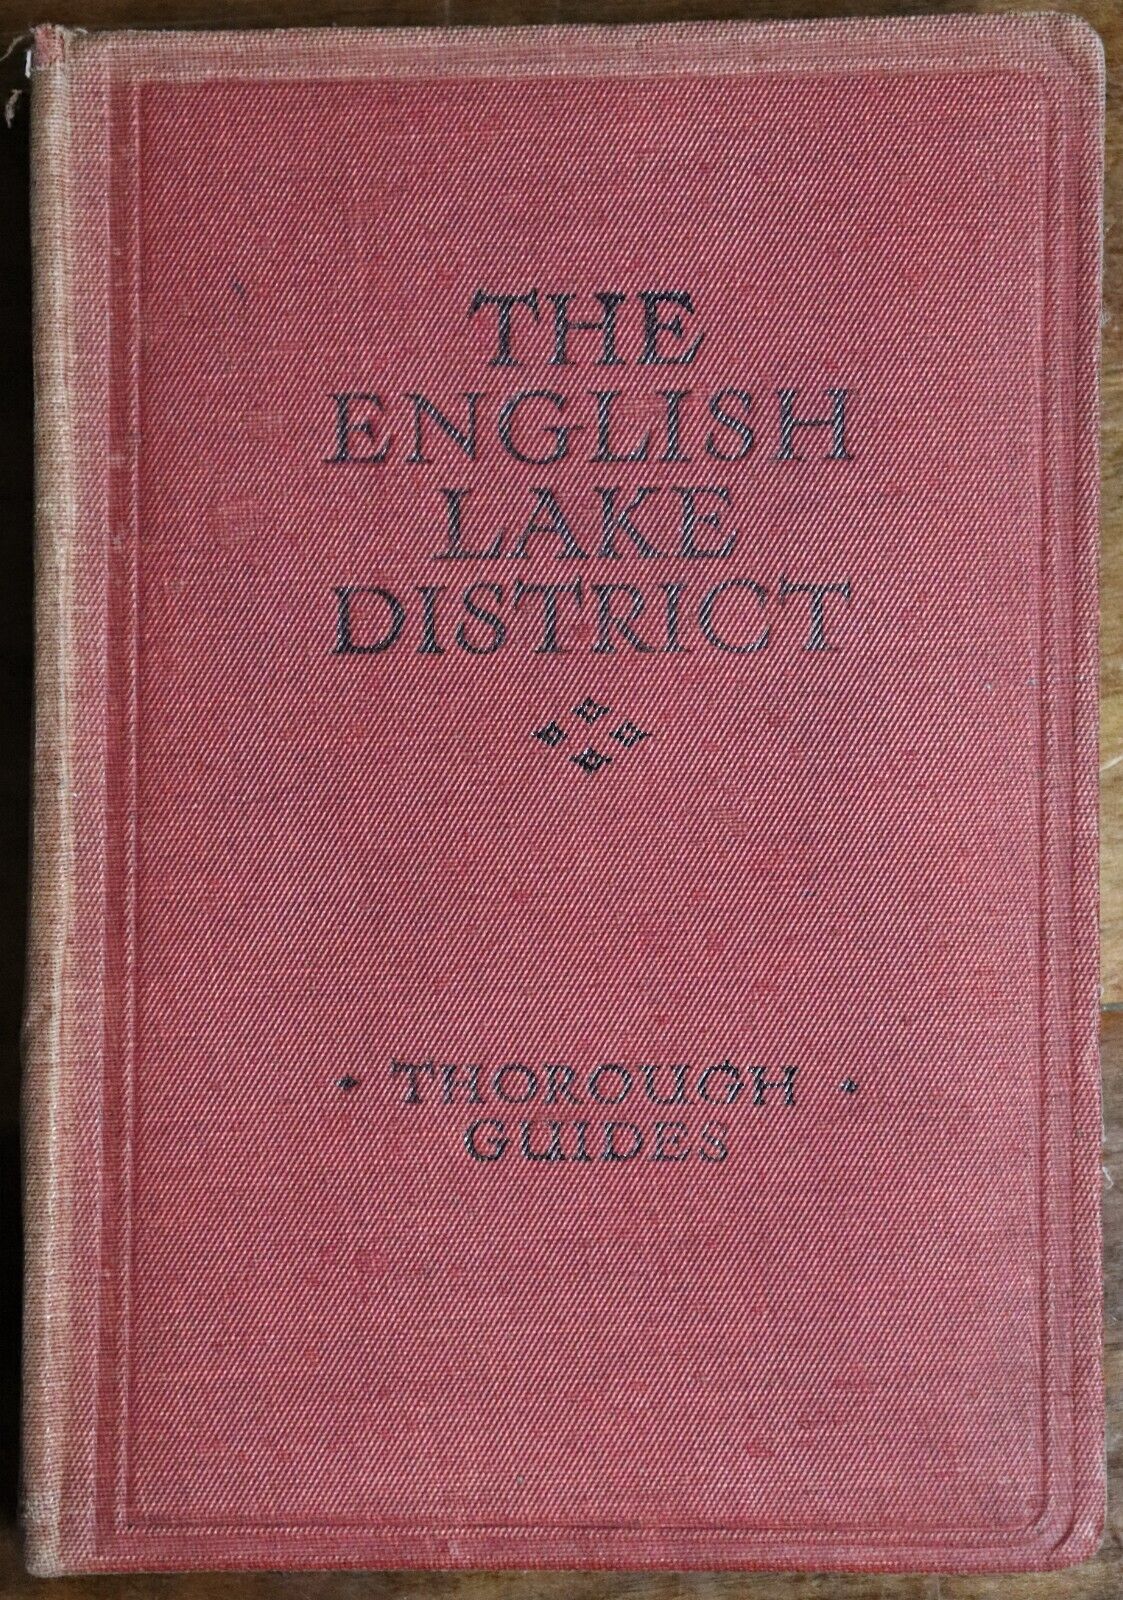 English Lake District: Ward Lock & Co - c1949 - Antique Travel Guide Book w/Maps